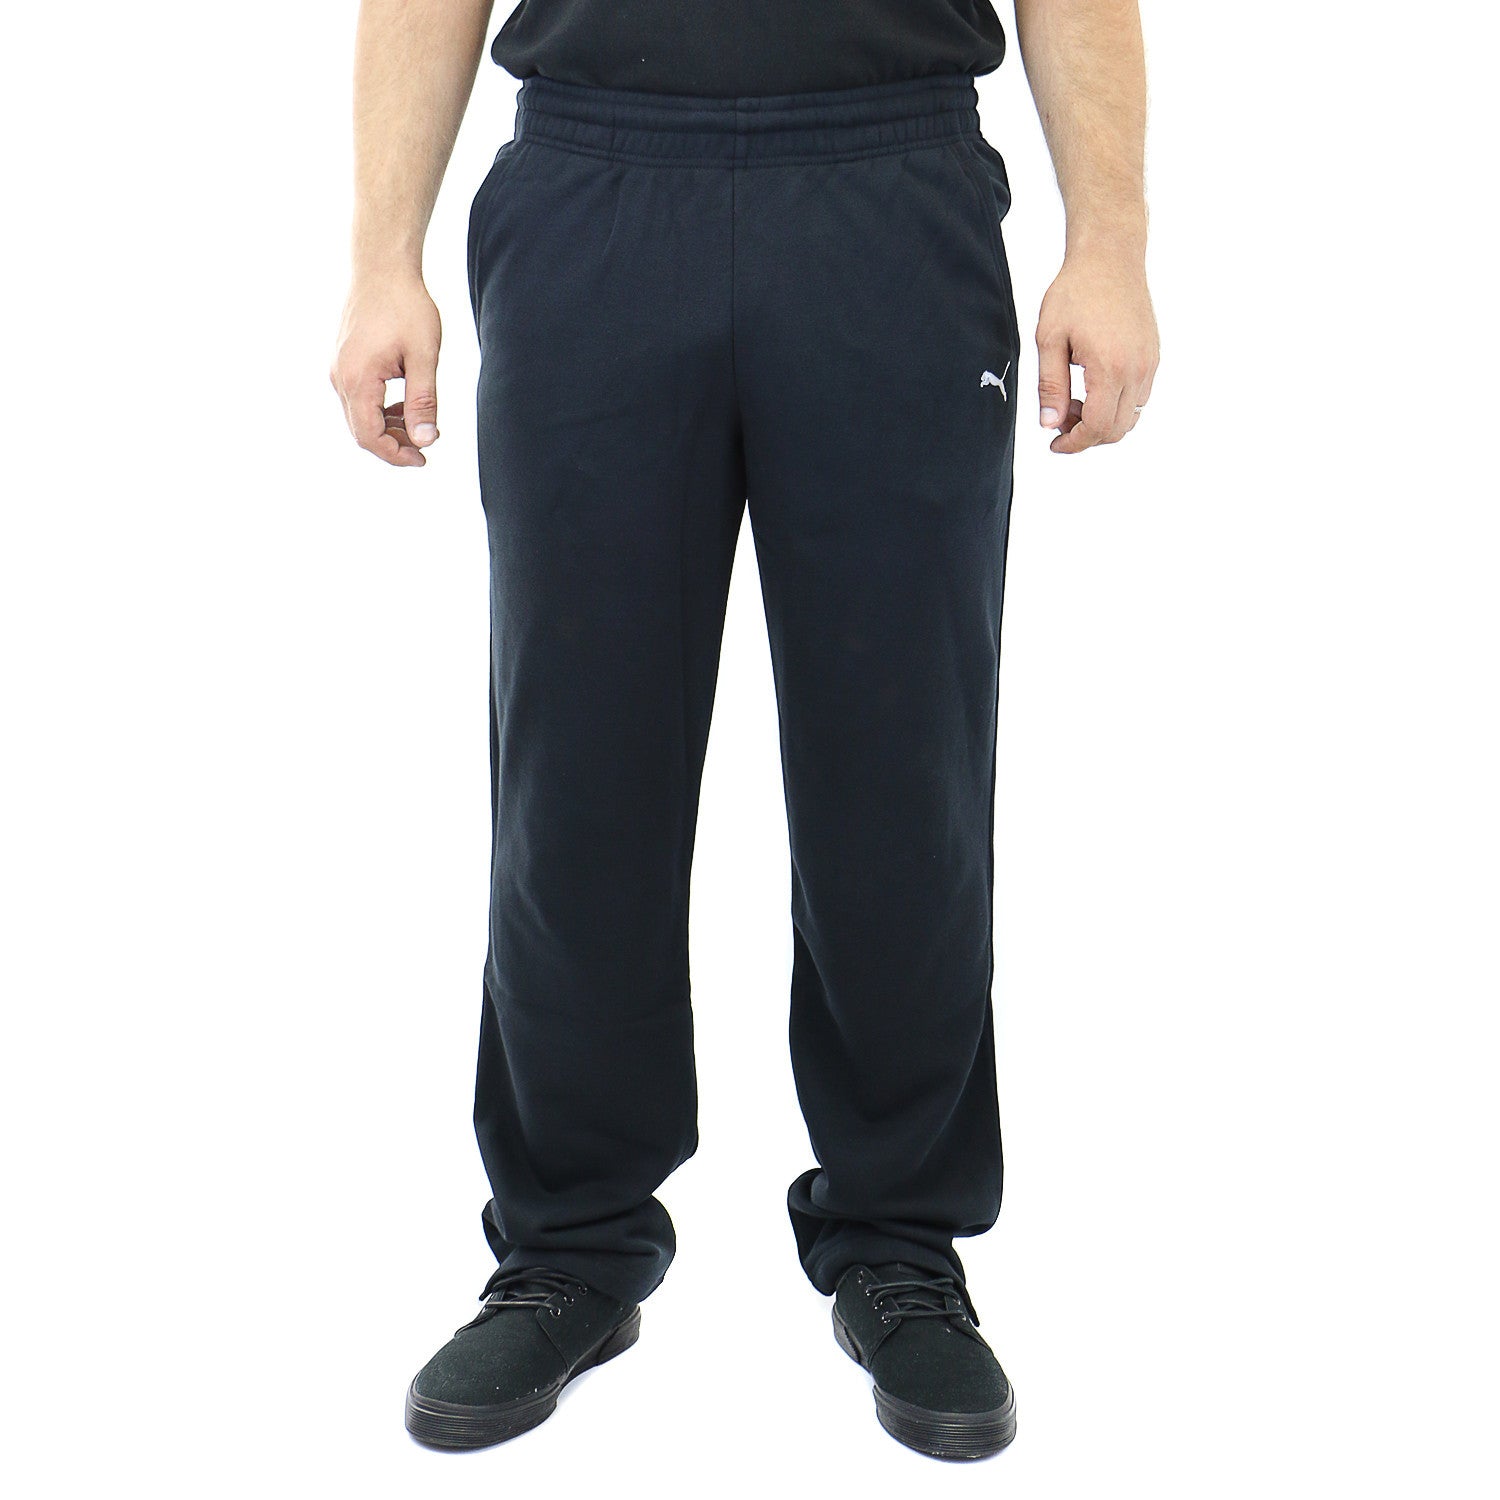 Puma Open Sweat Pants open sweatpants - Black - Mens - Shoplifestyle